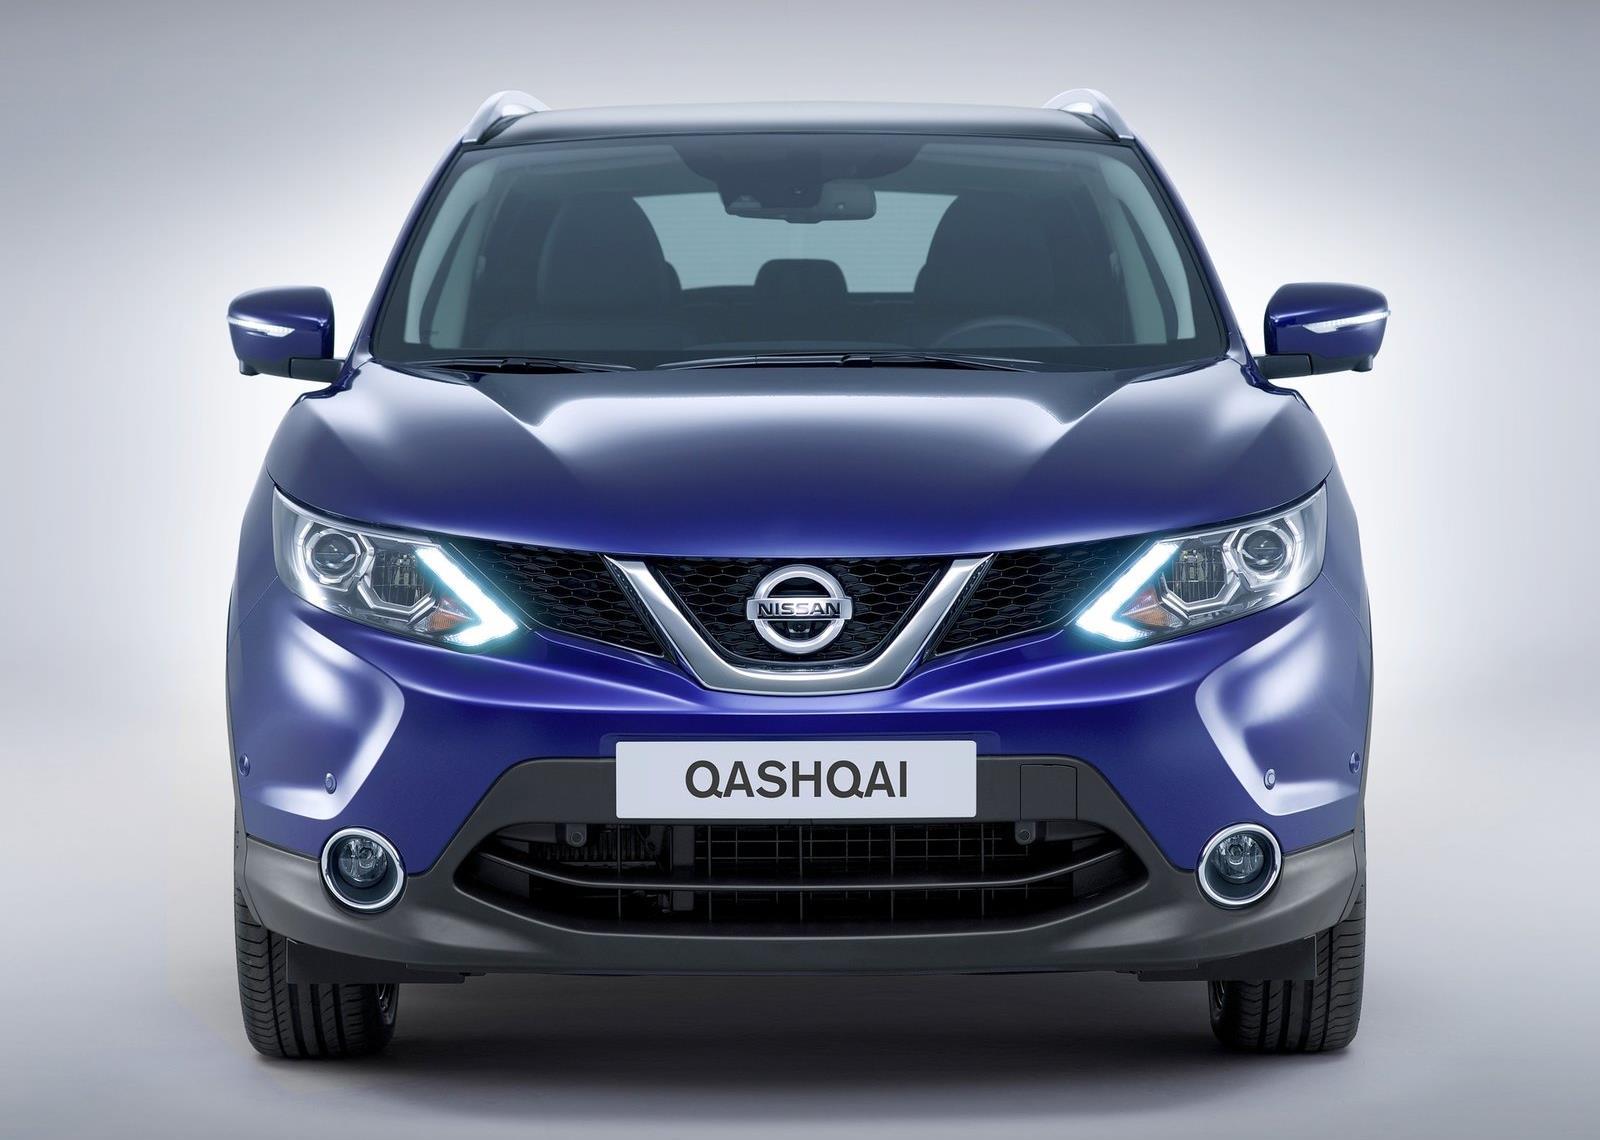 2014 Nissan Qashqai Front View